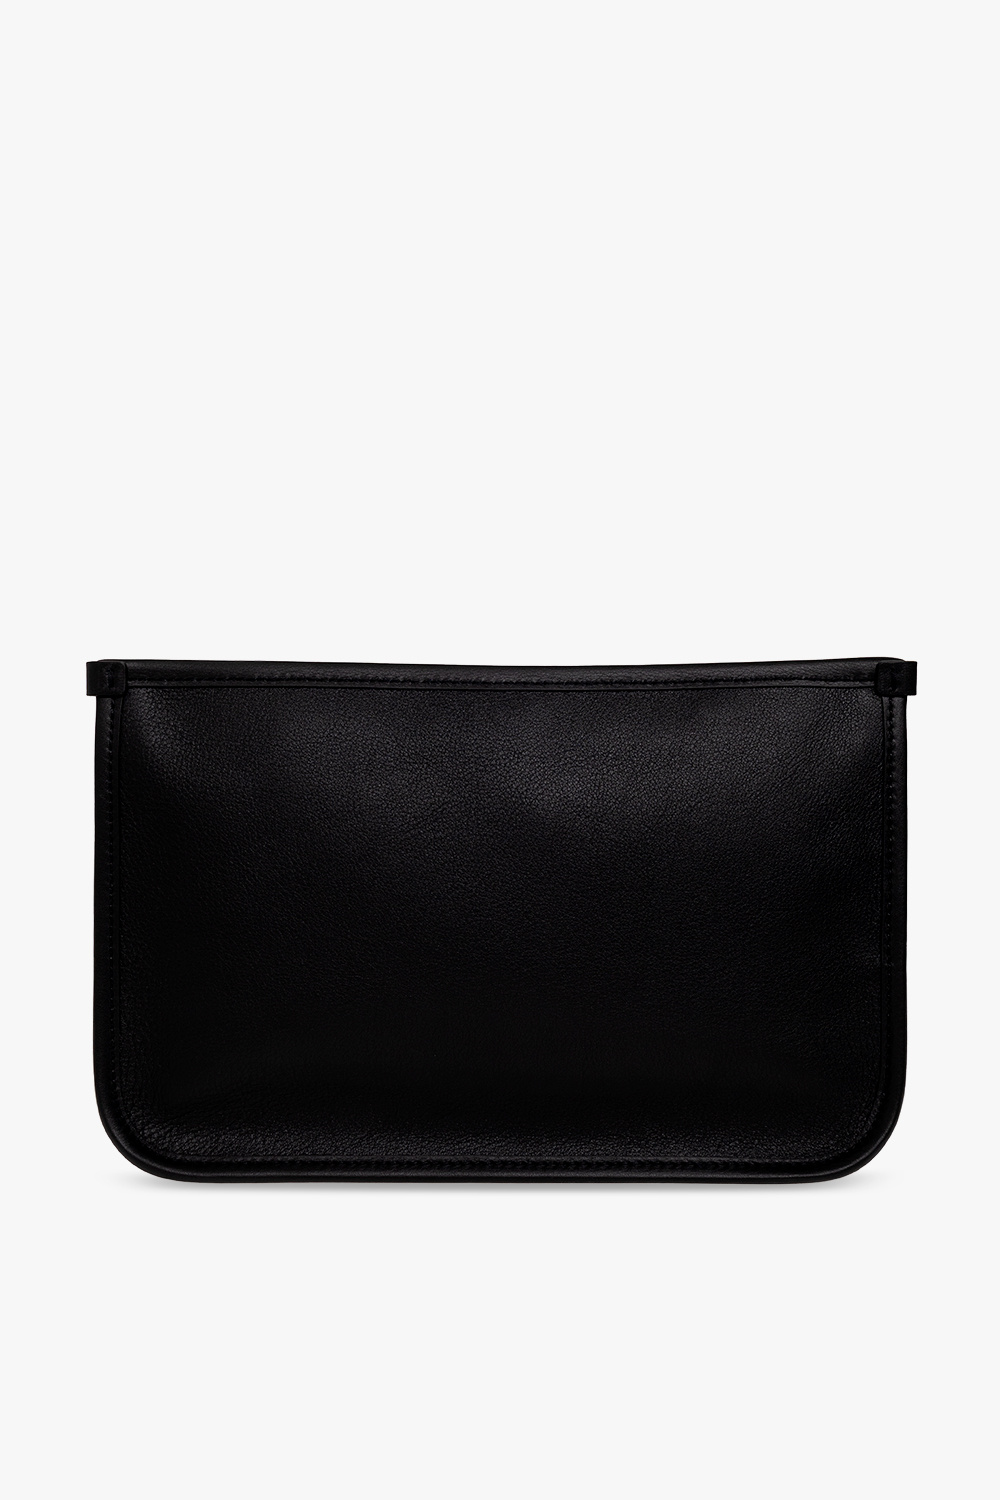 Salvatore Ferragamo Leather handbag with logo